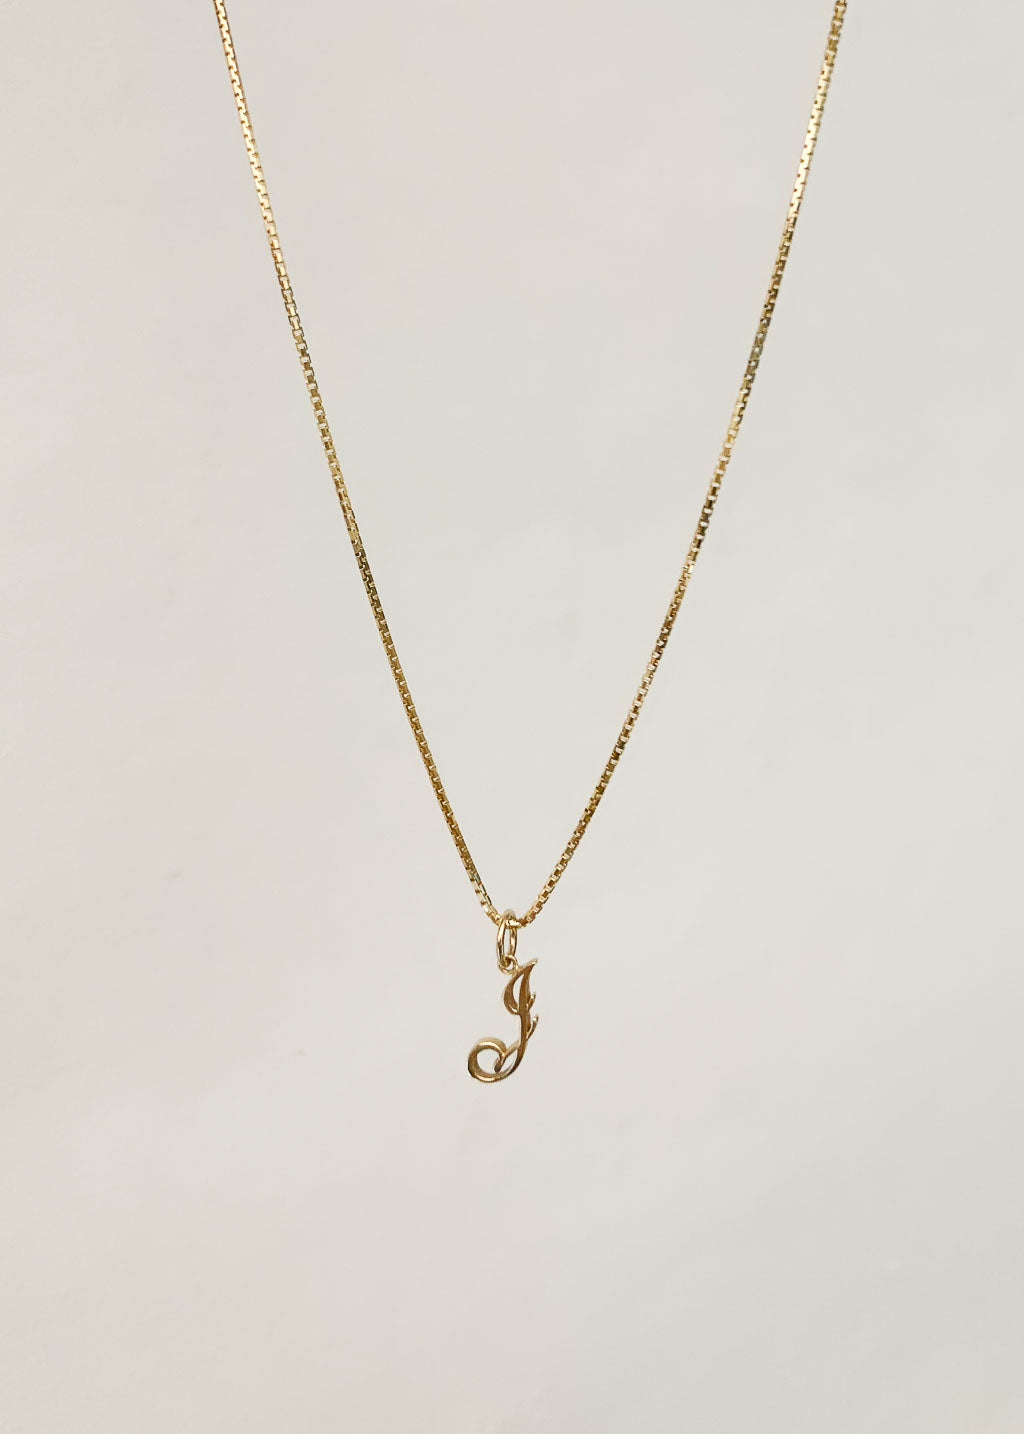 alt="Box Chain Necklace with love letter pendant"